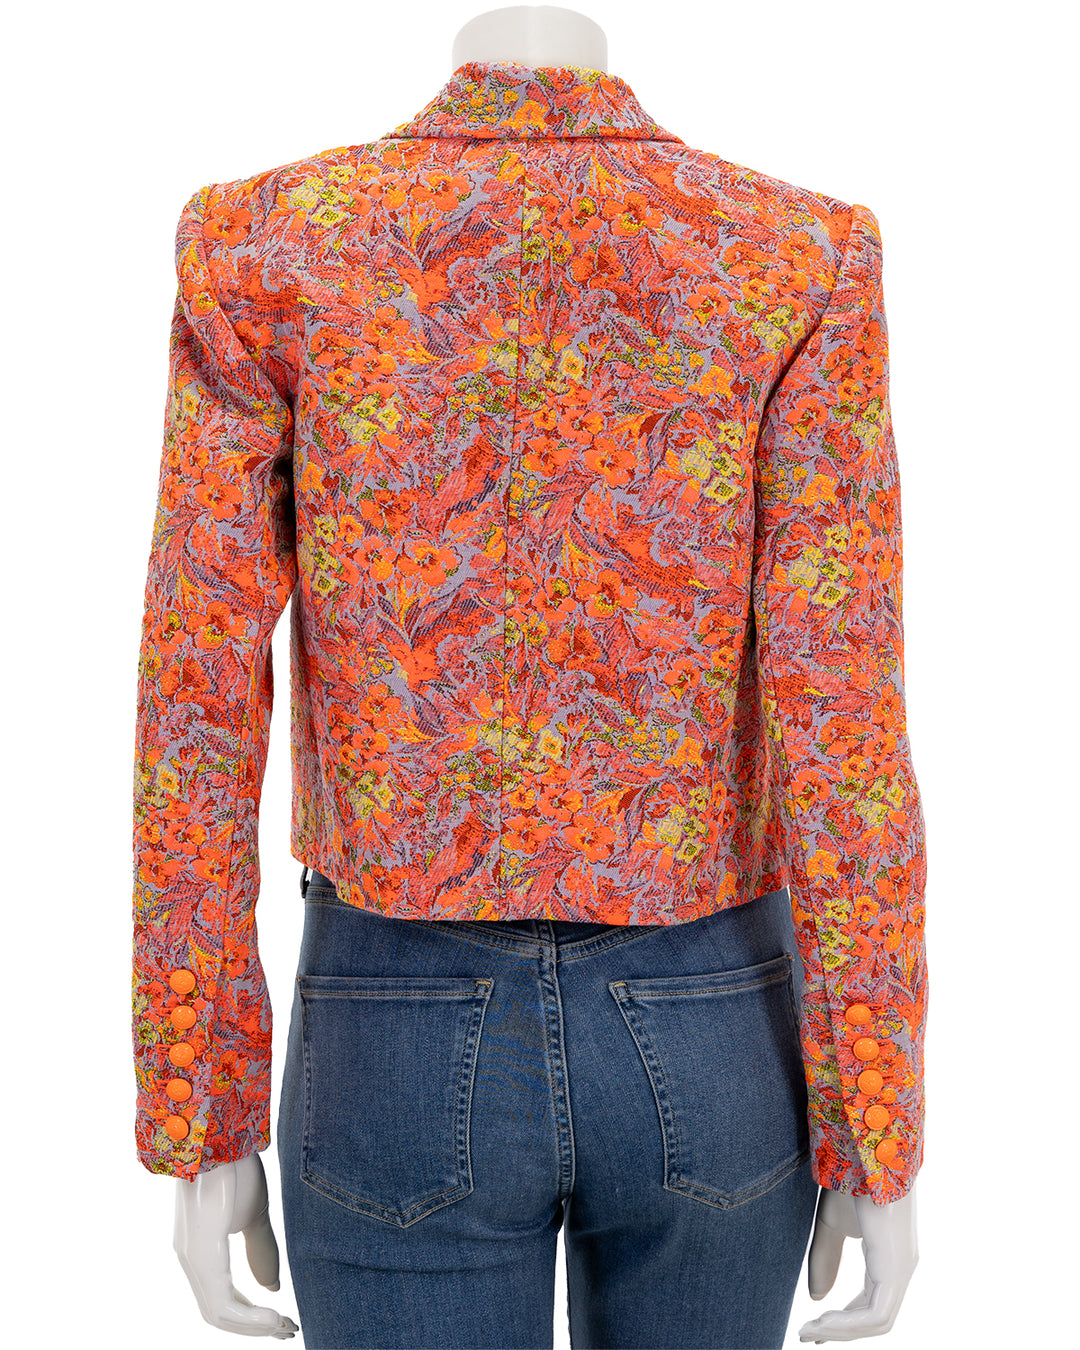 Back view of L'agence's lila boxy blazer in orange floral.